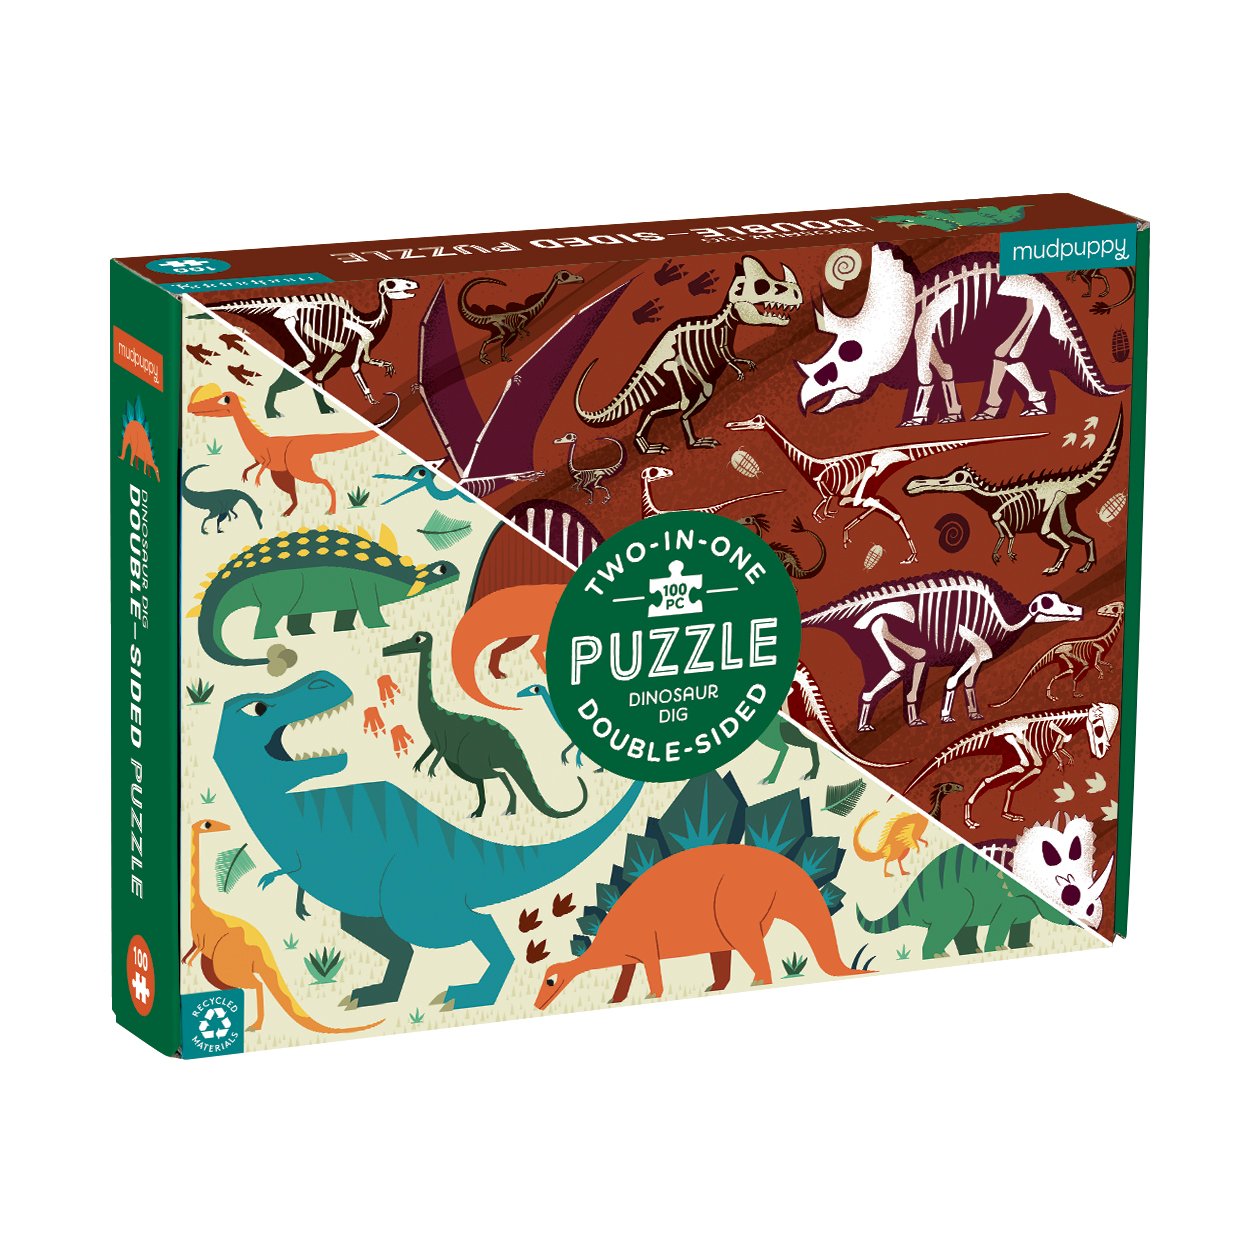 Mudpuppy Double-Sided Puzzle 100 Pieces - Animal Kingdom